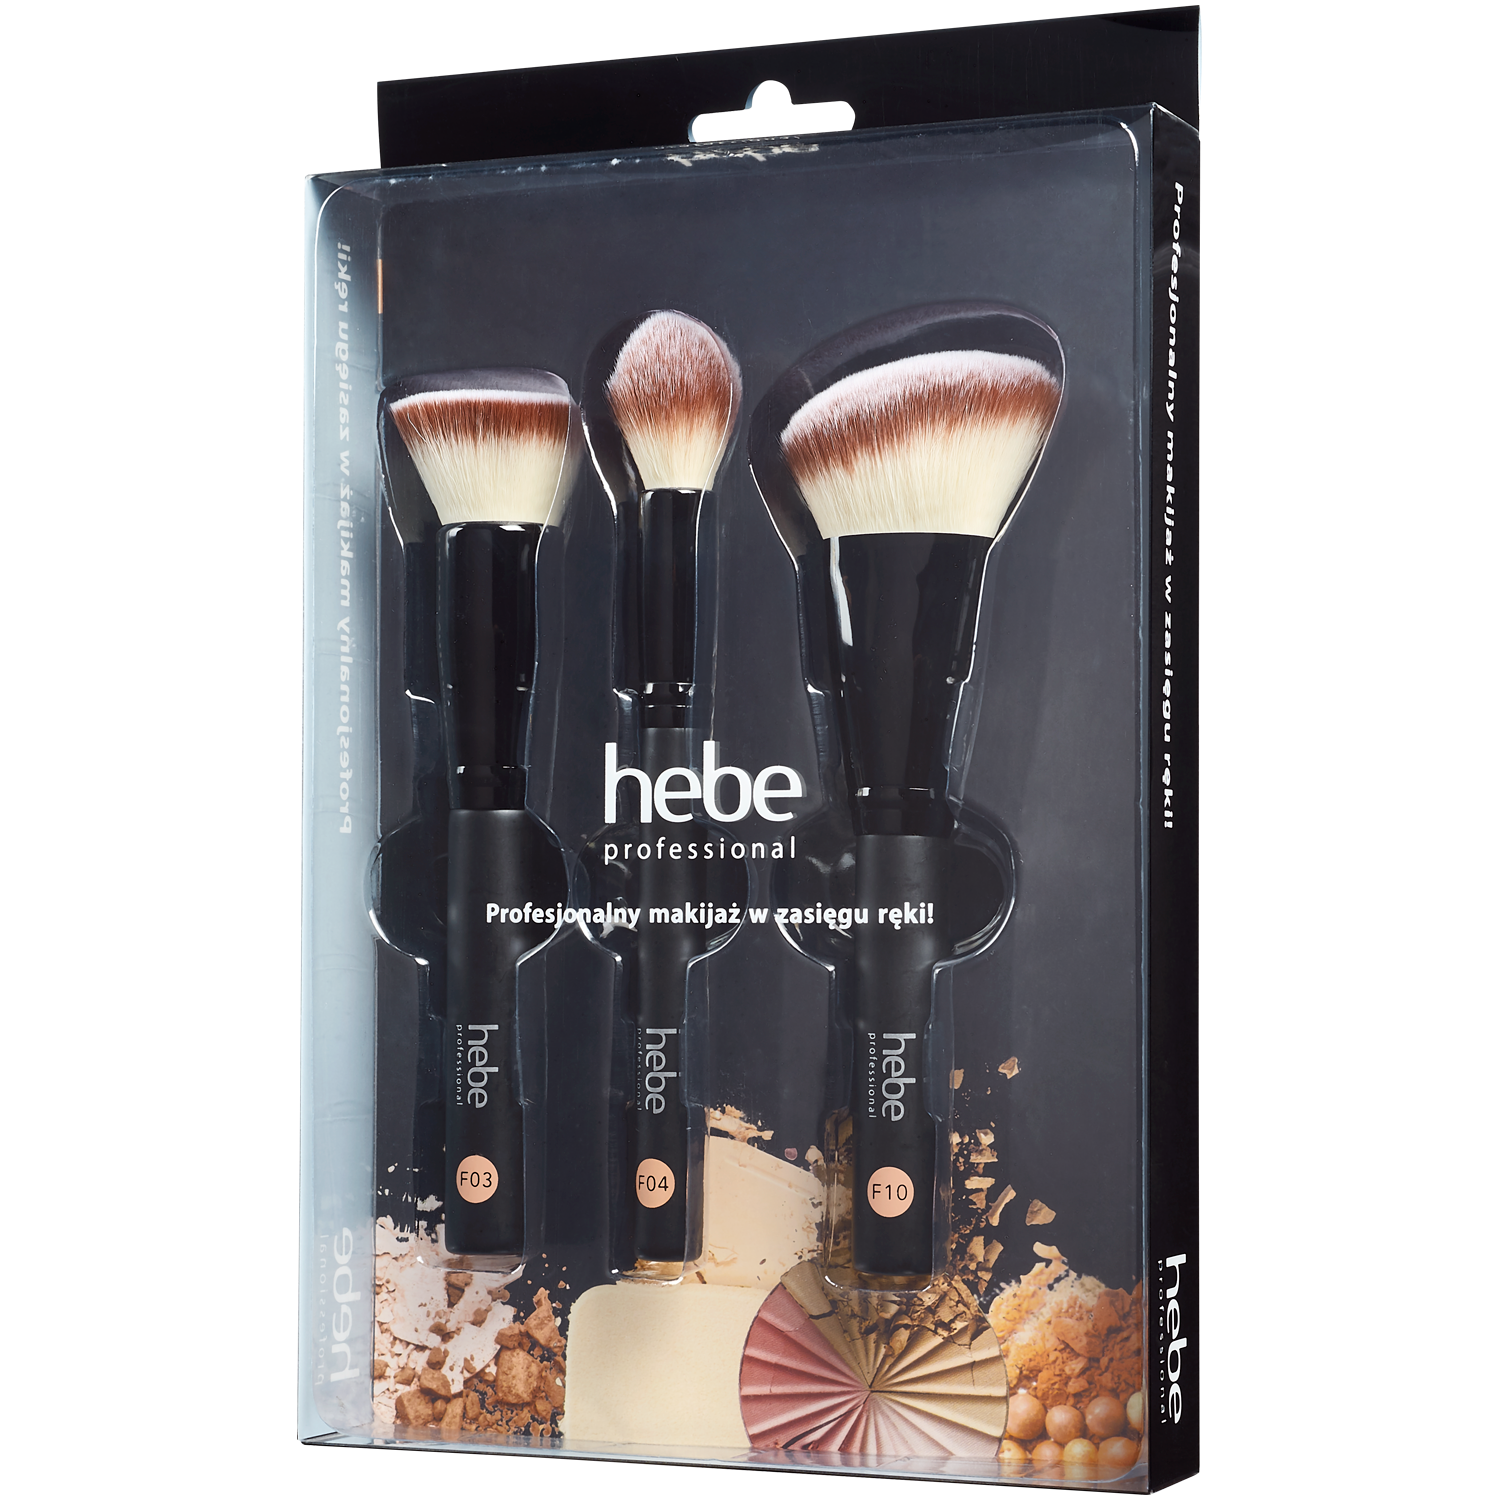 Hebe Professional набор: кисти для макияжа, 3 шт. runail professional кисти для макияжа 12 шт